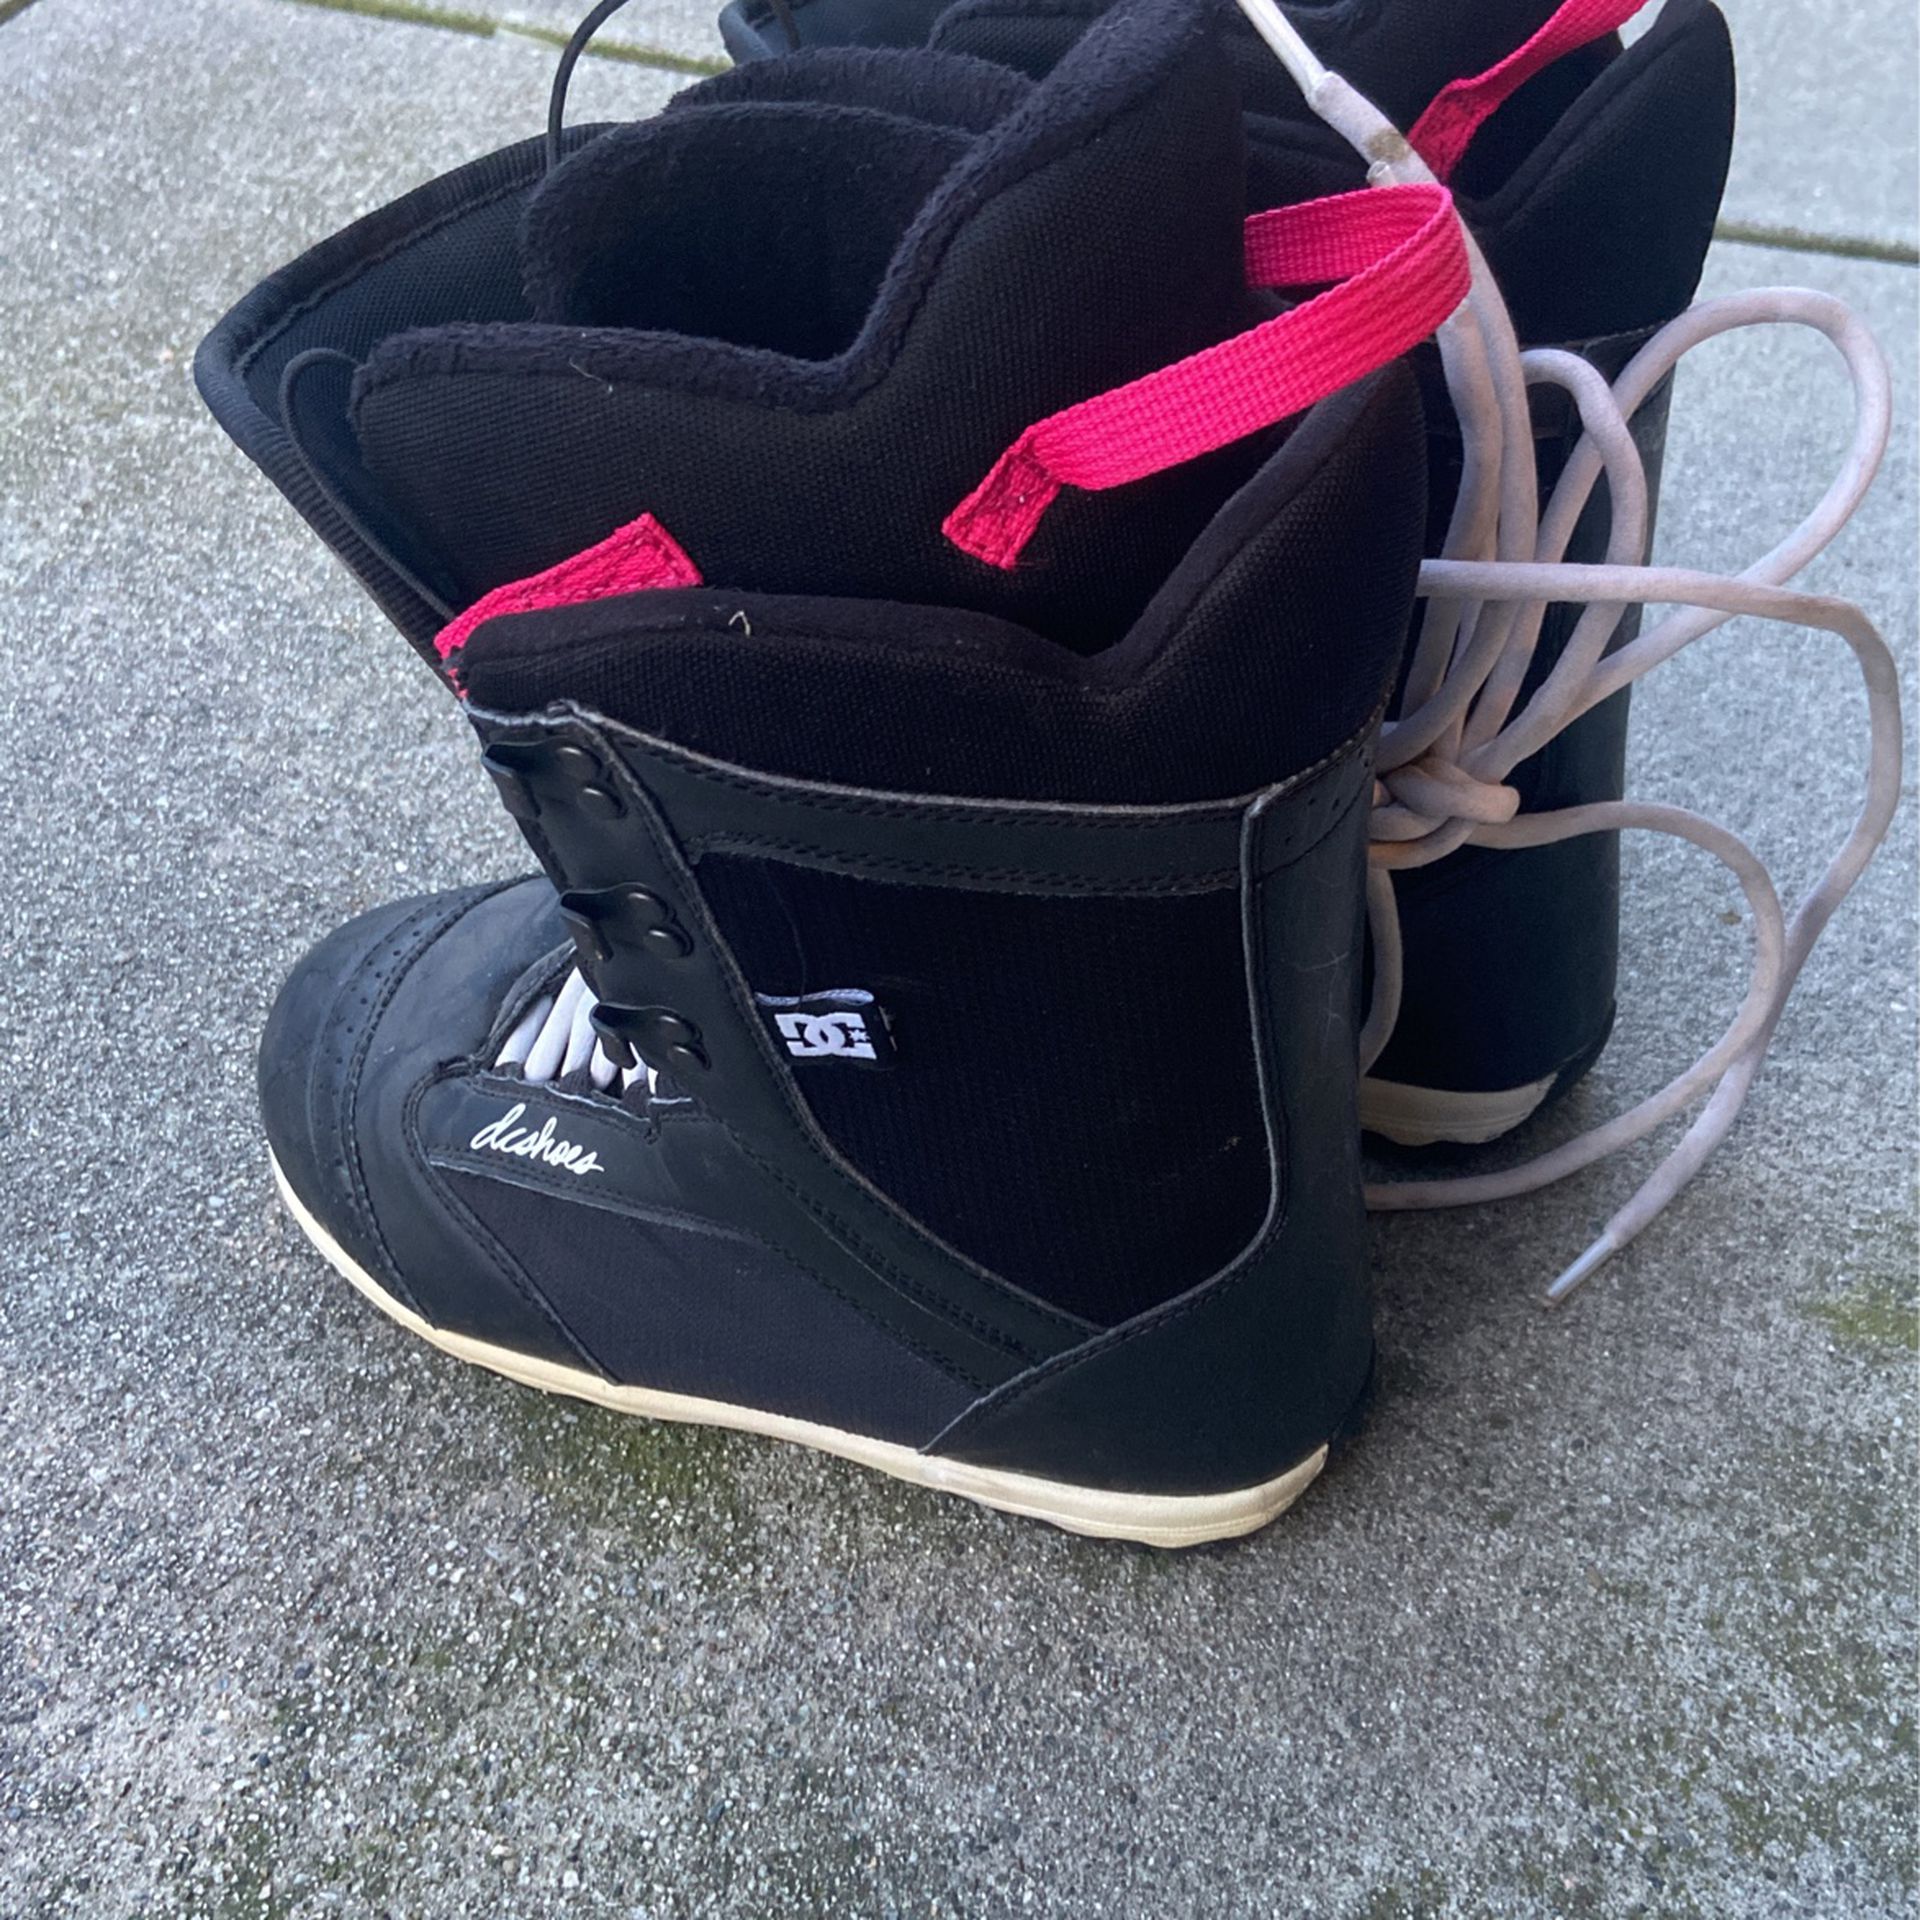 Dc Woman’s Karma Snow Boots